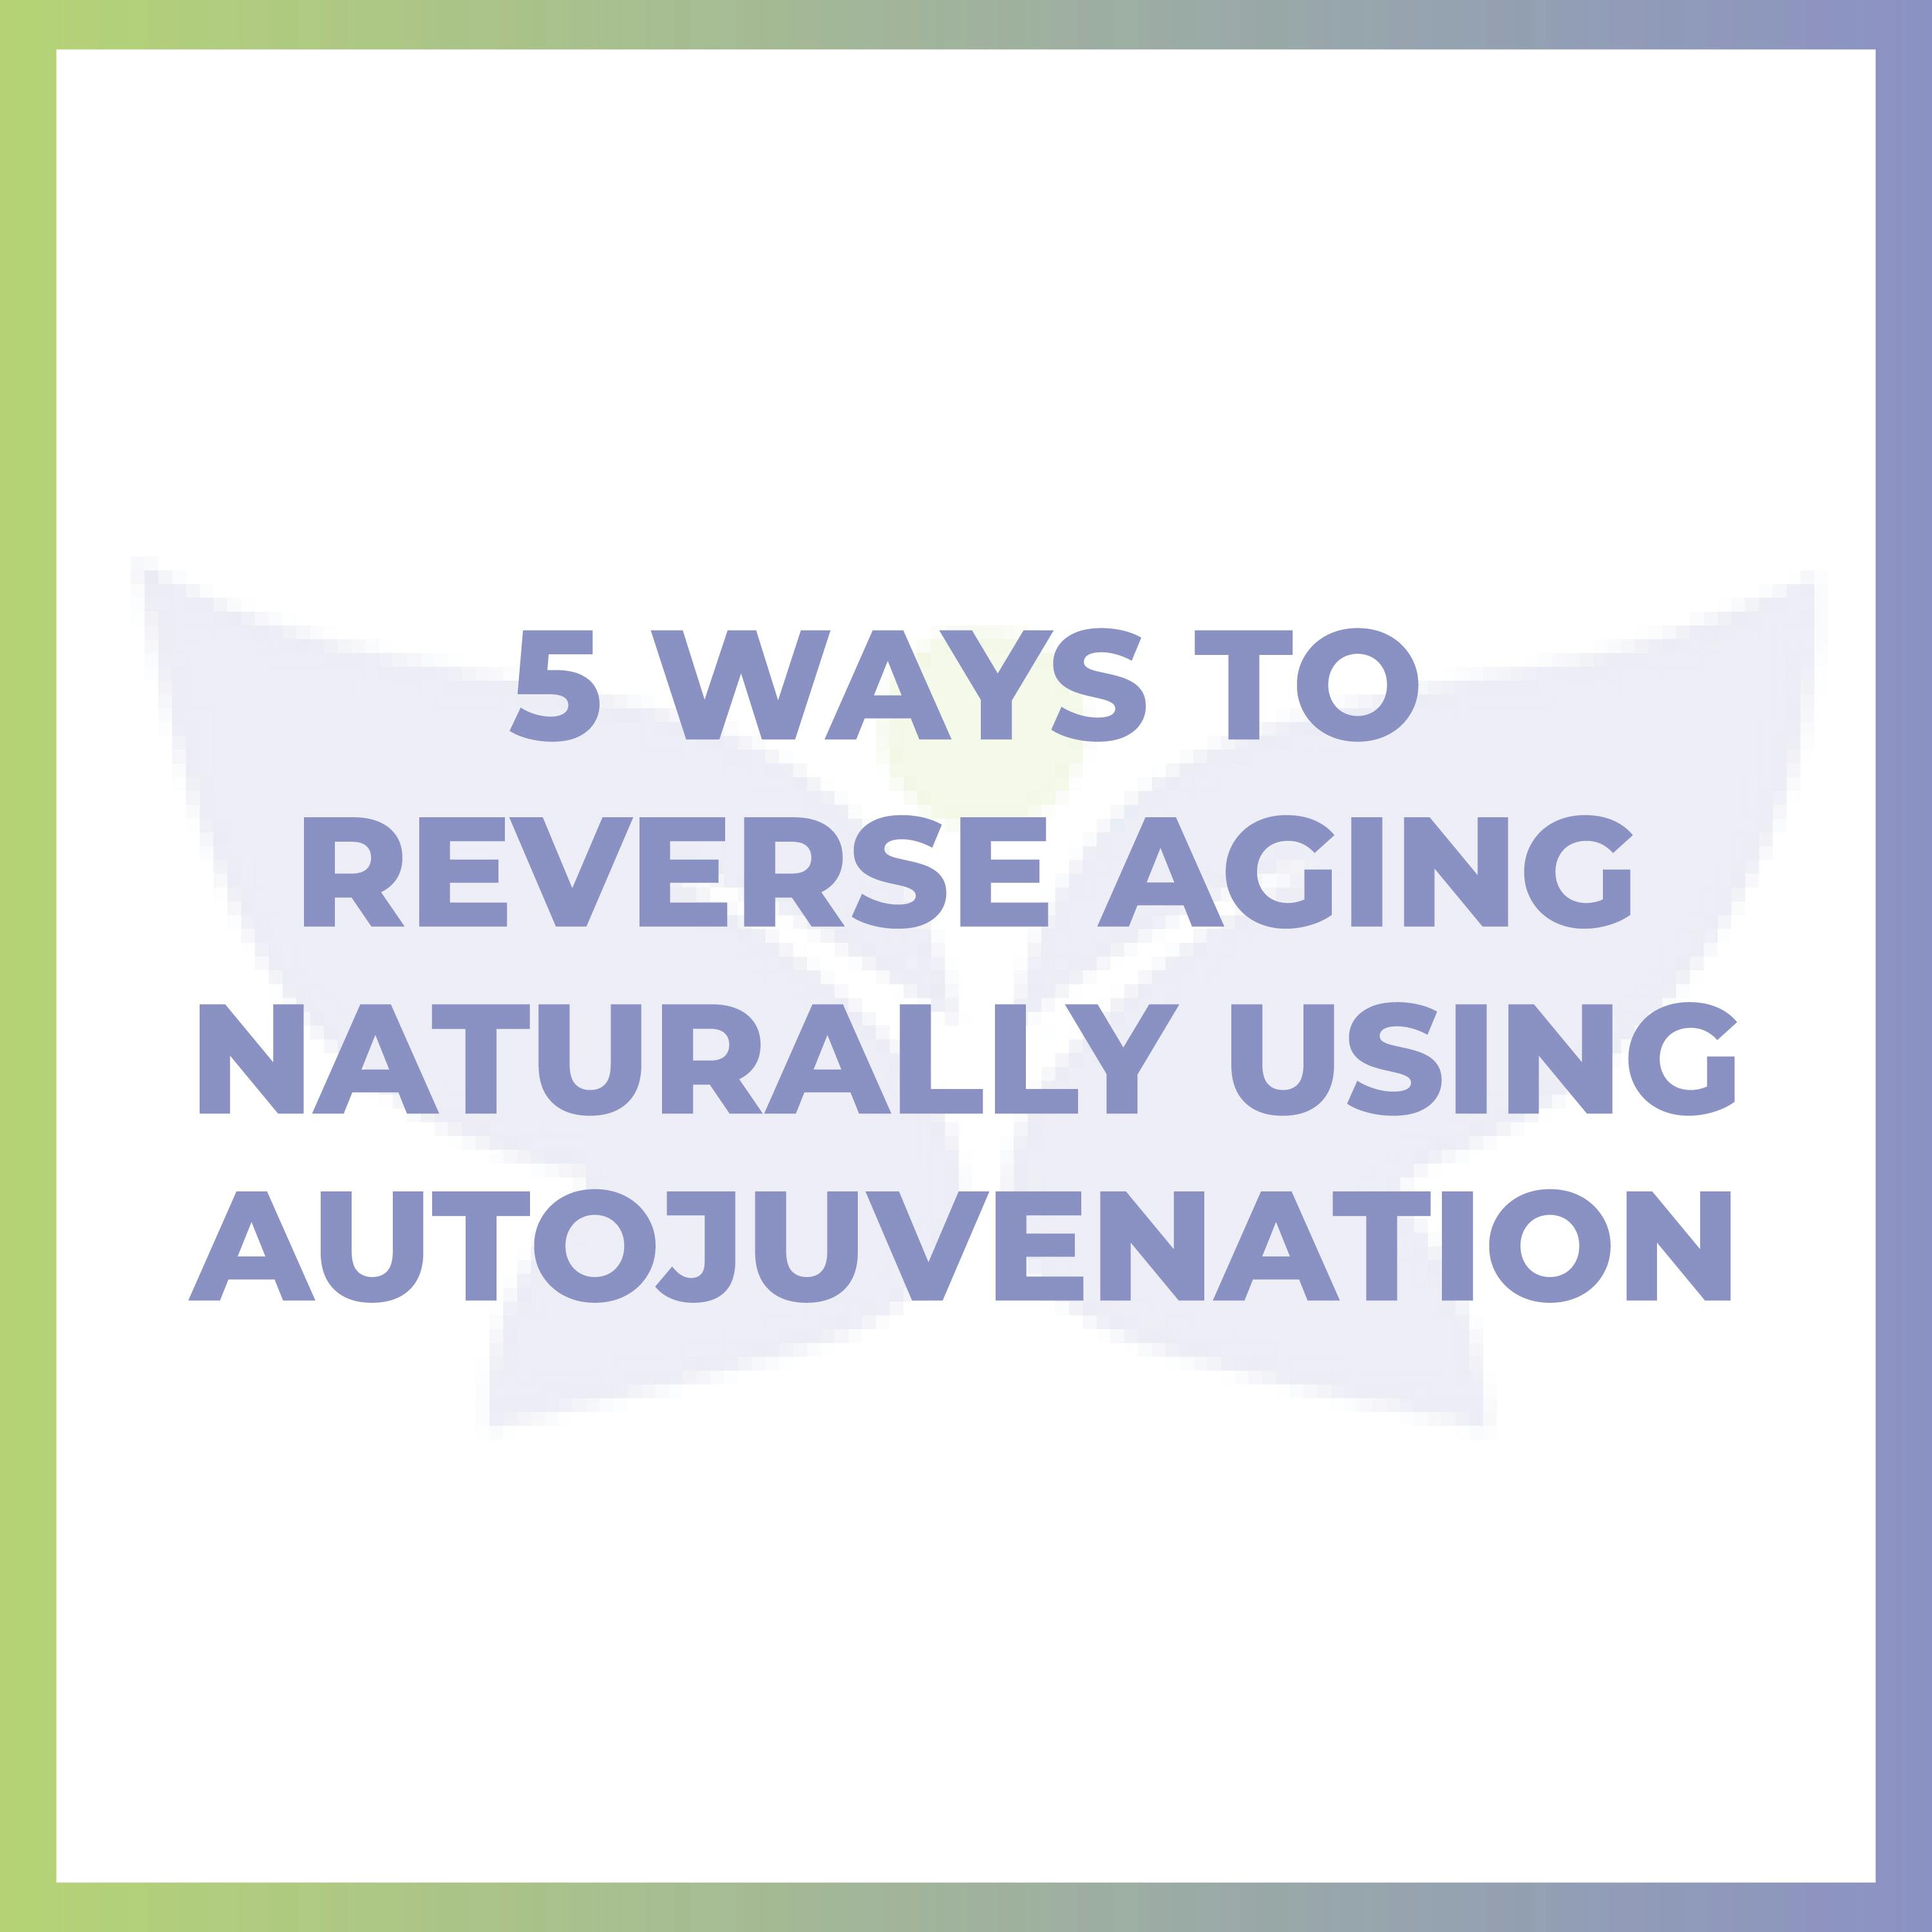 5 Ways to Reverse Aging NATURALLY Using AUTOJUVENATION